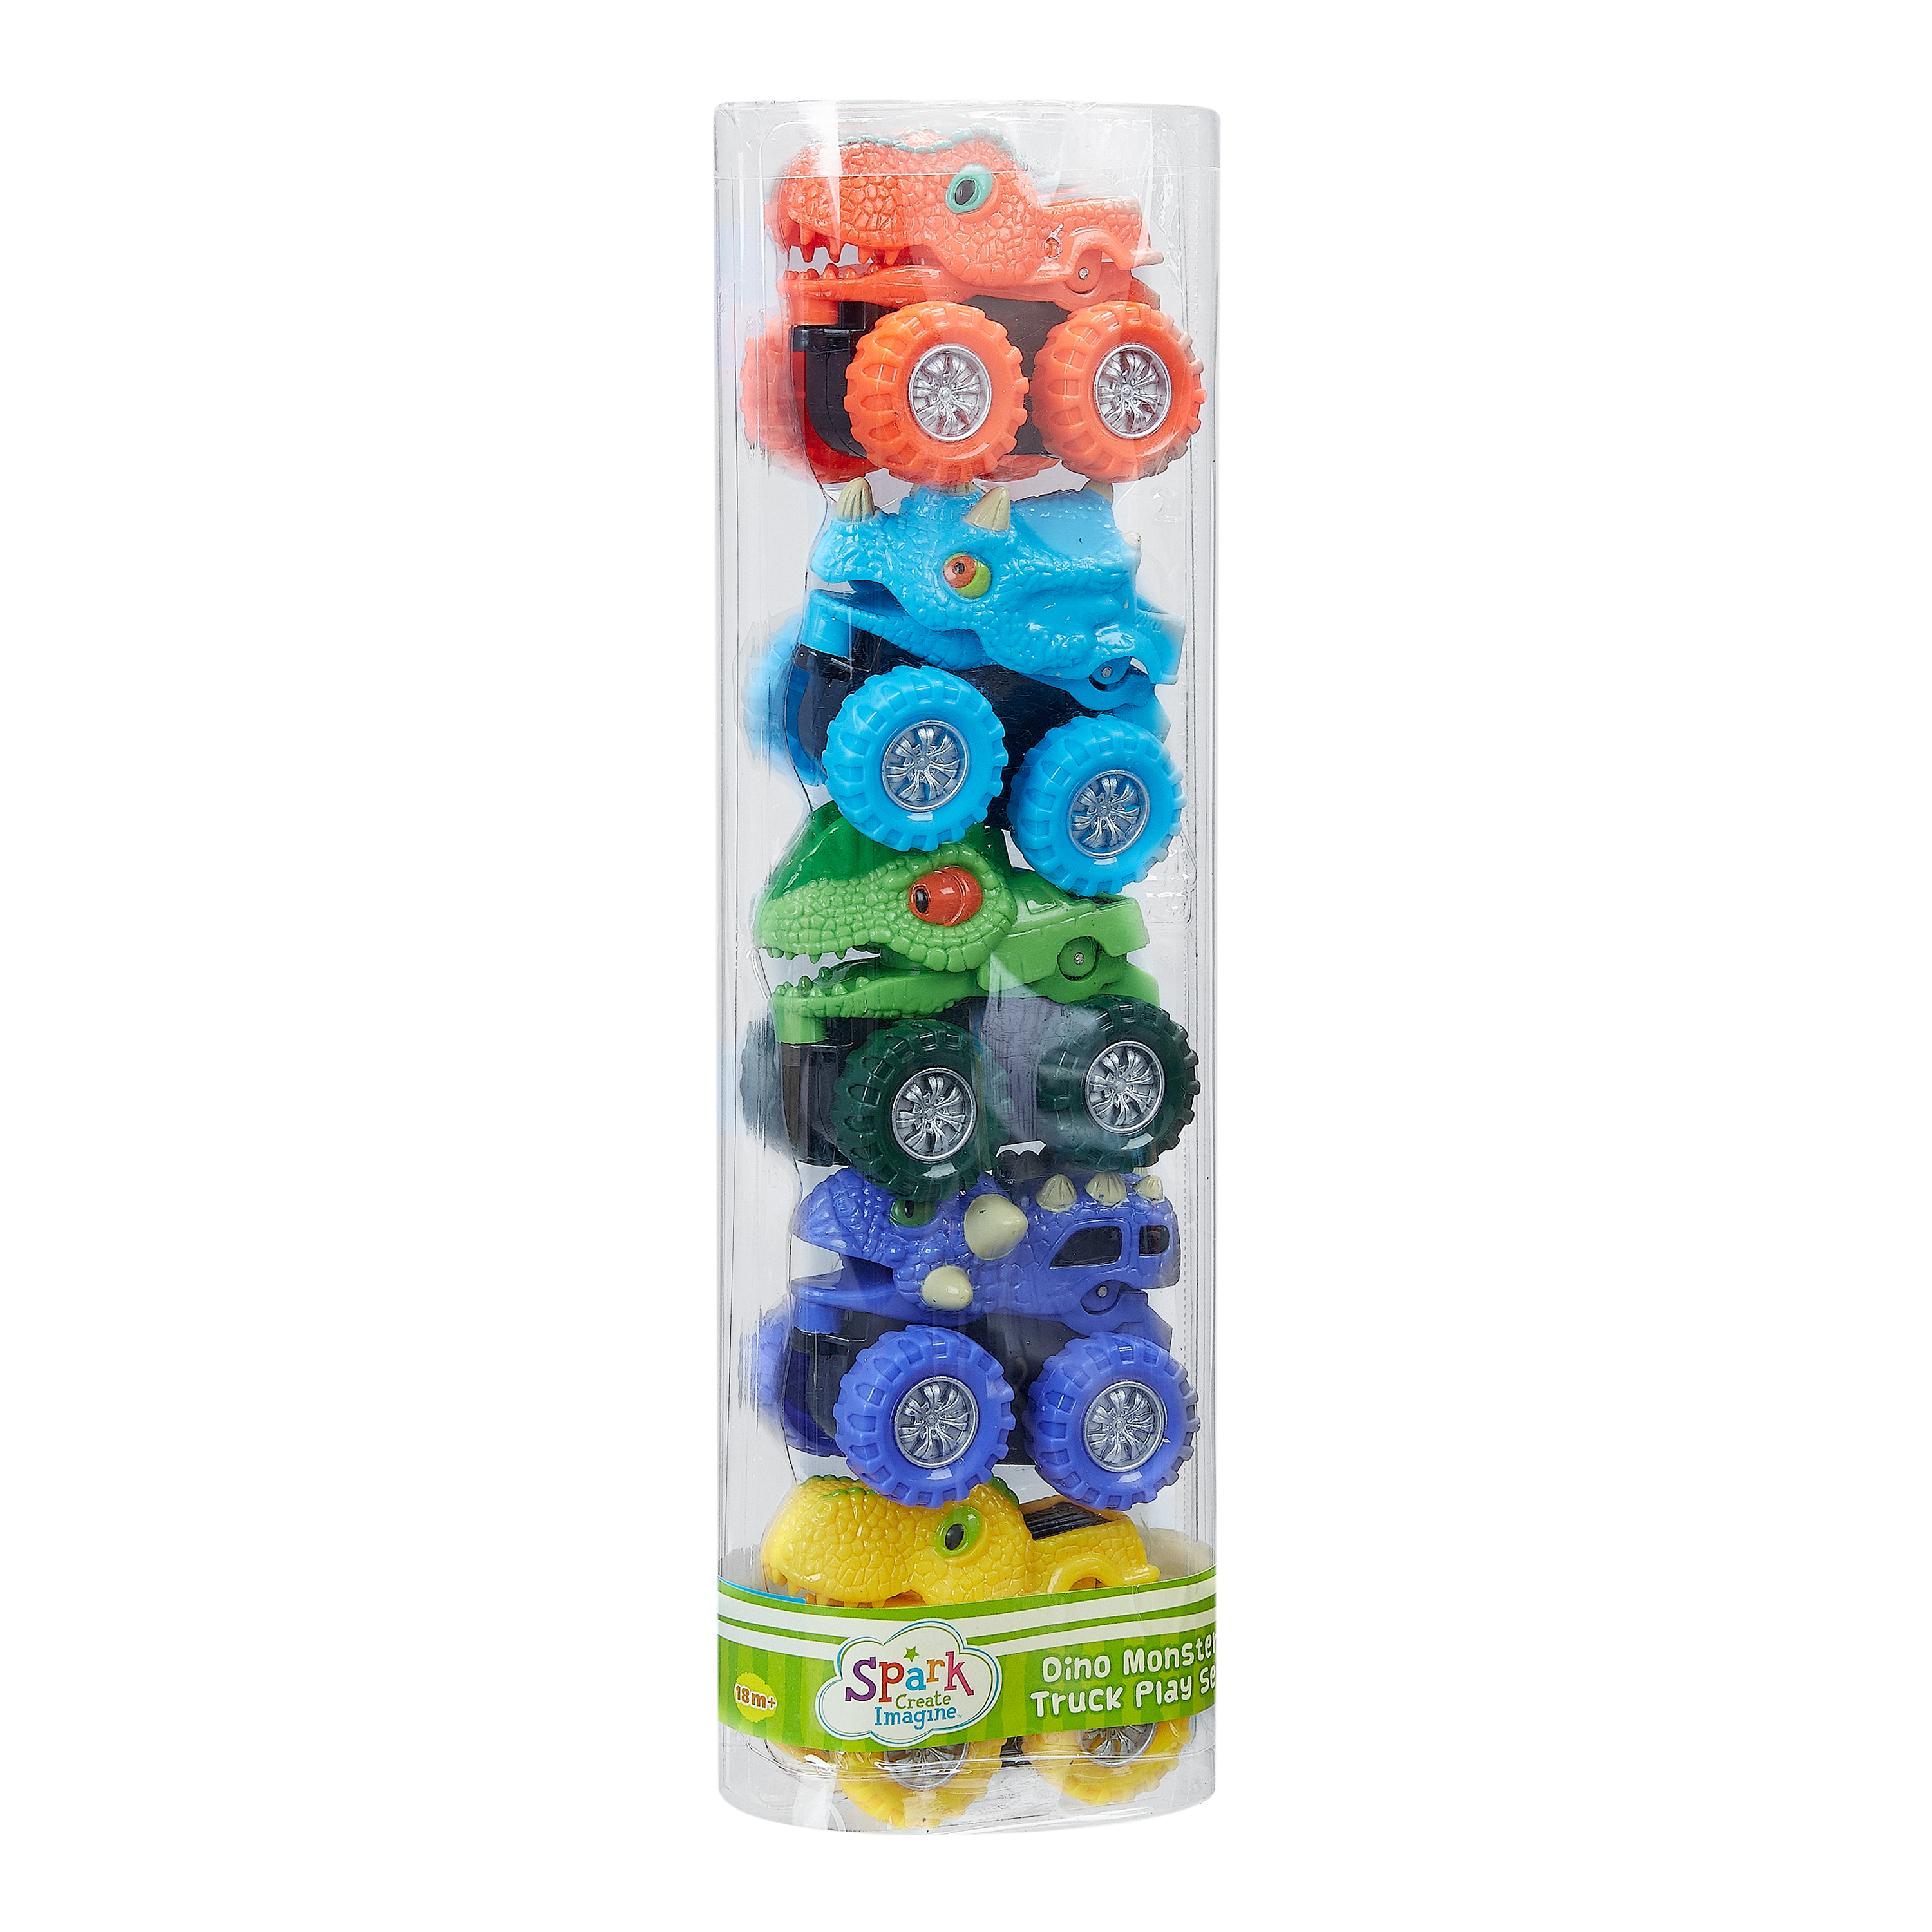 Spark Create Imagine 5 Piece Monster Trucks.  Amazing Looking Free Wheel Colorful Monster Trucks! - image 1 of 8